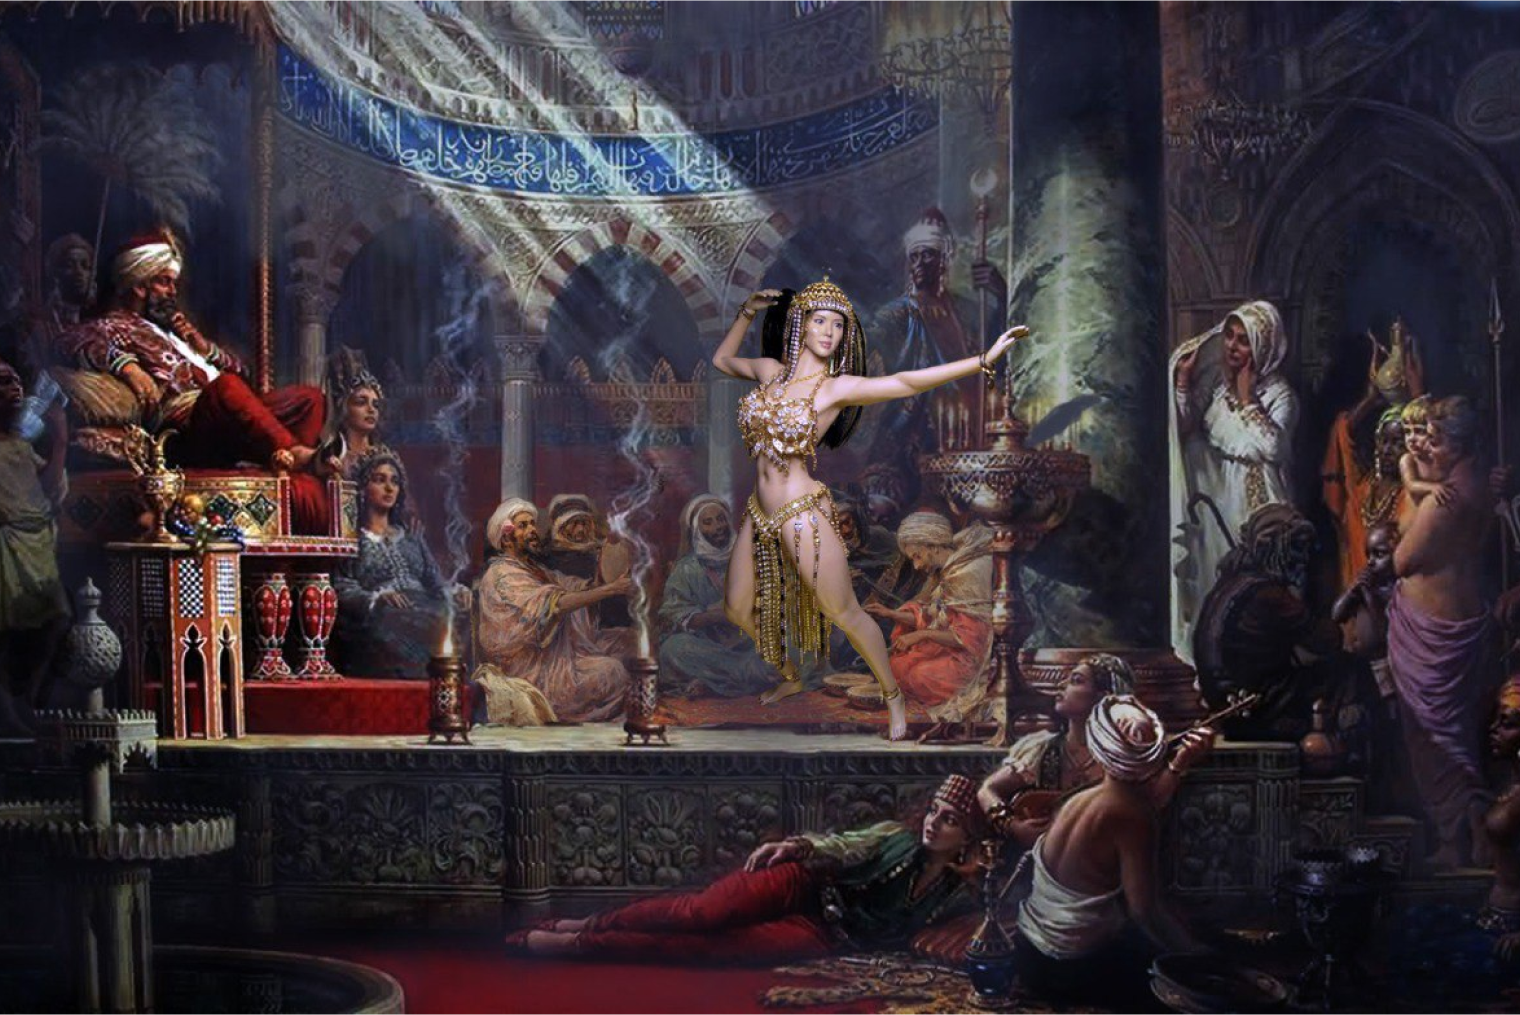 Танцовщицы Древнего Востока танцуют перед султанами